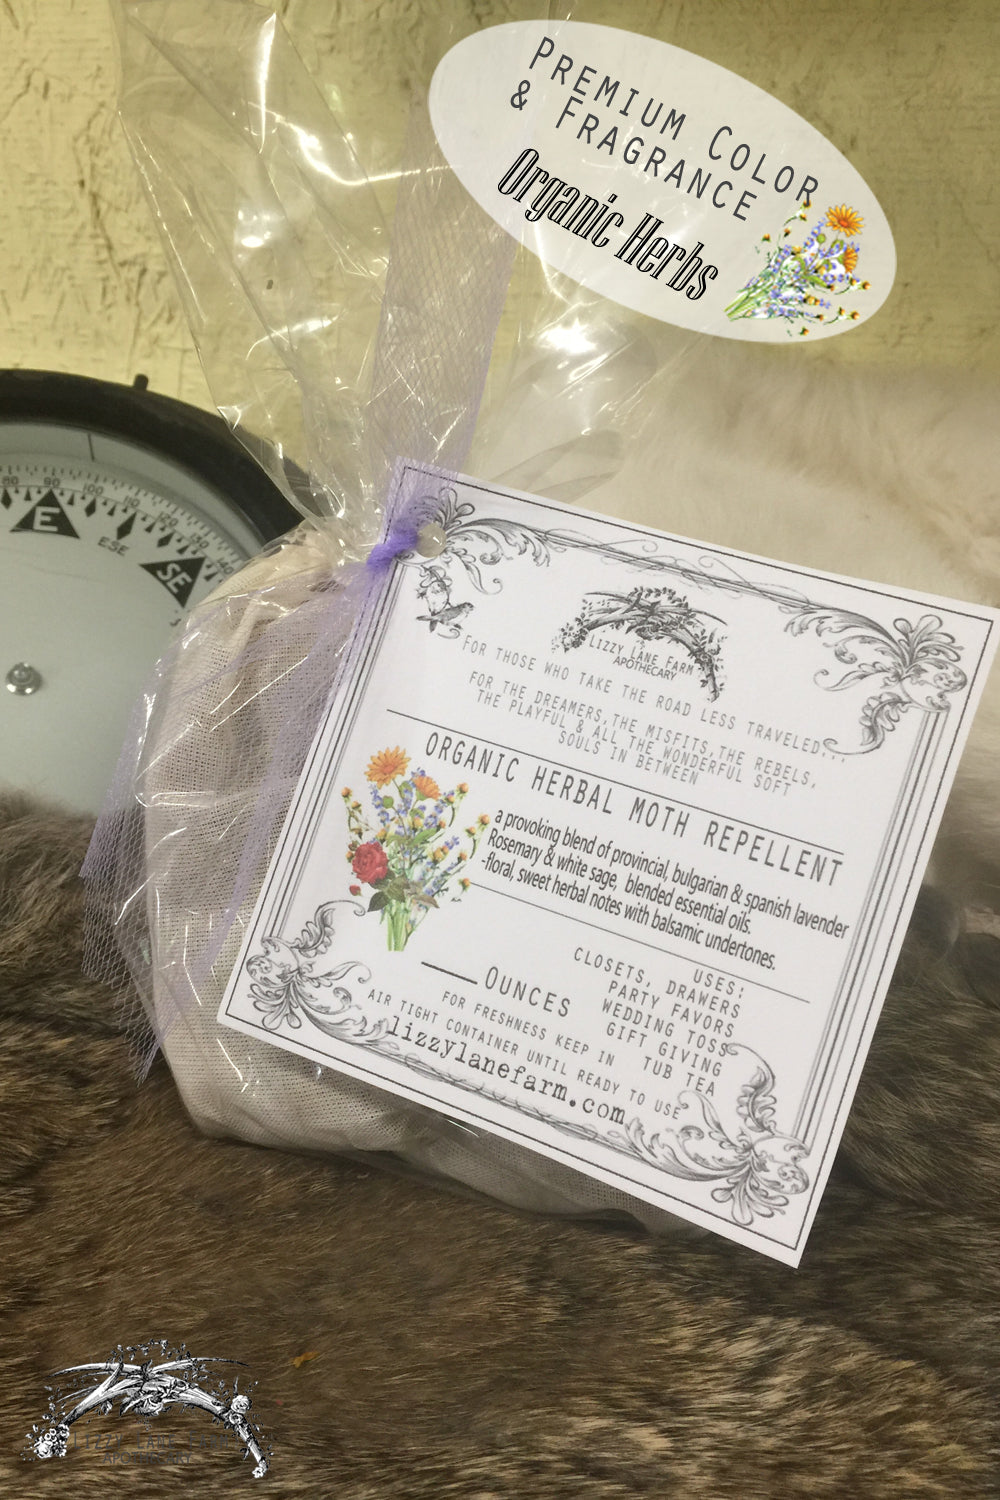 Organic Herbal Moth Repellent Sachet Sets - Lizzy Lane Farm Apothecary